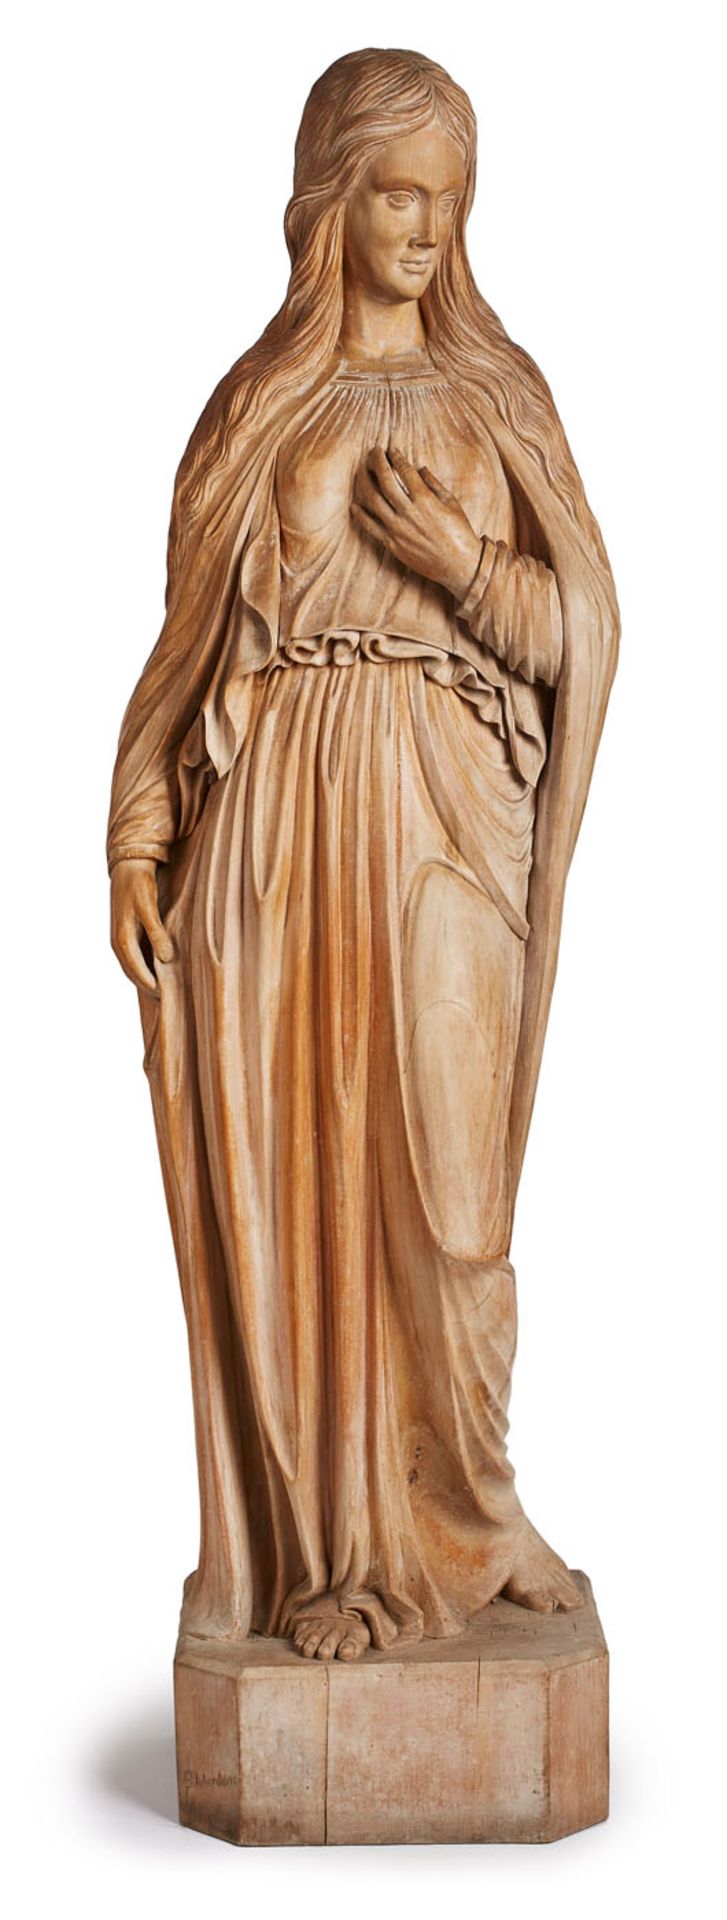 Gr. Standfigur Maria Magdalena, Nazarener-Stil, um 1900. Lindenholz, vollrd. geschnitzt. - Bild 3 aus 3